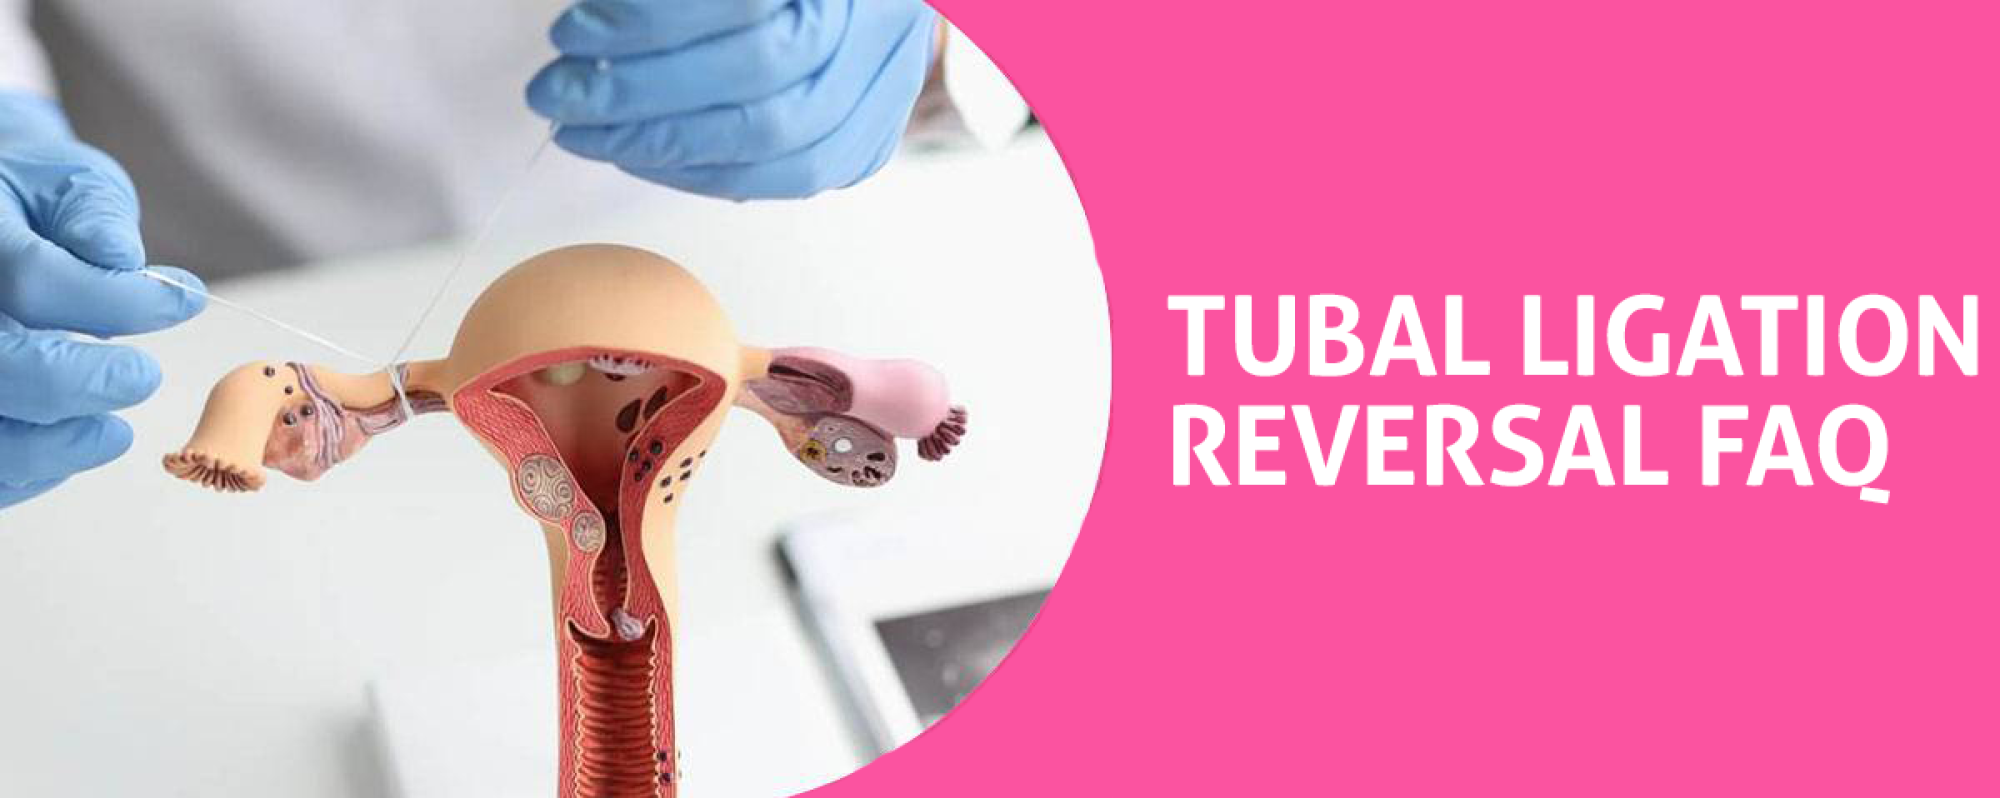 Tubal Ligation Reversal FAQ, Most Common Questions and Answers to Tubal Ligation Reversal